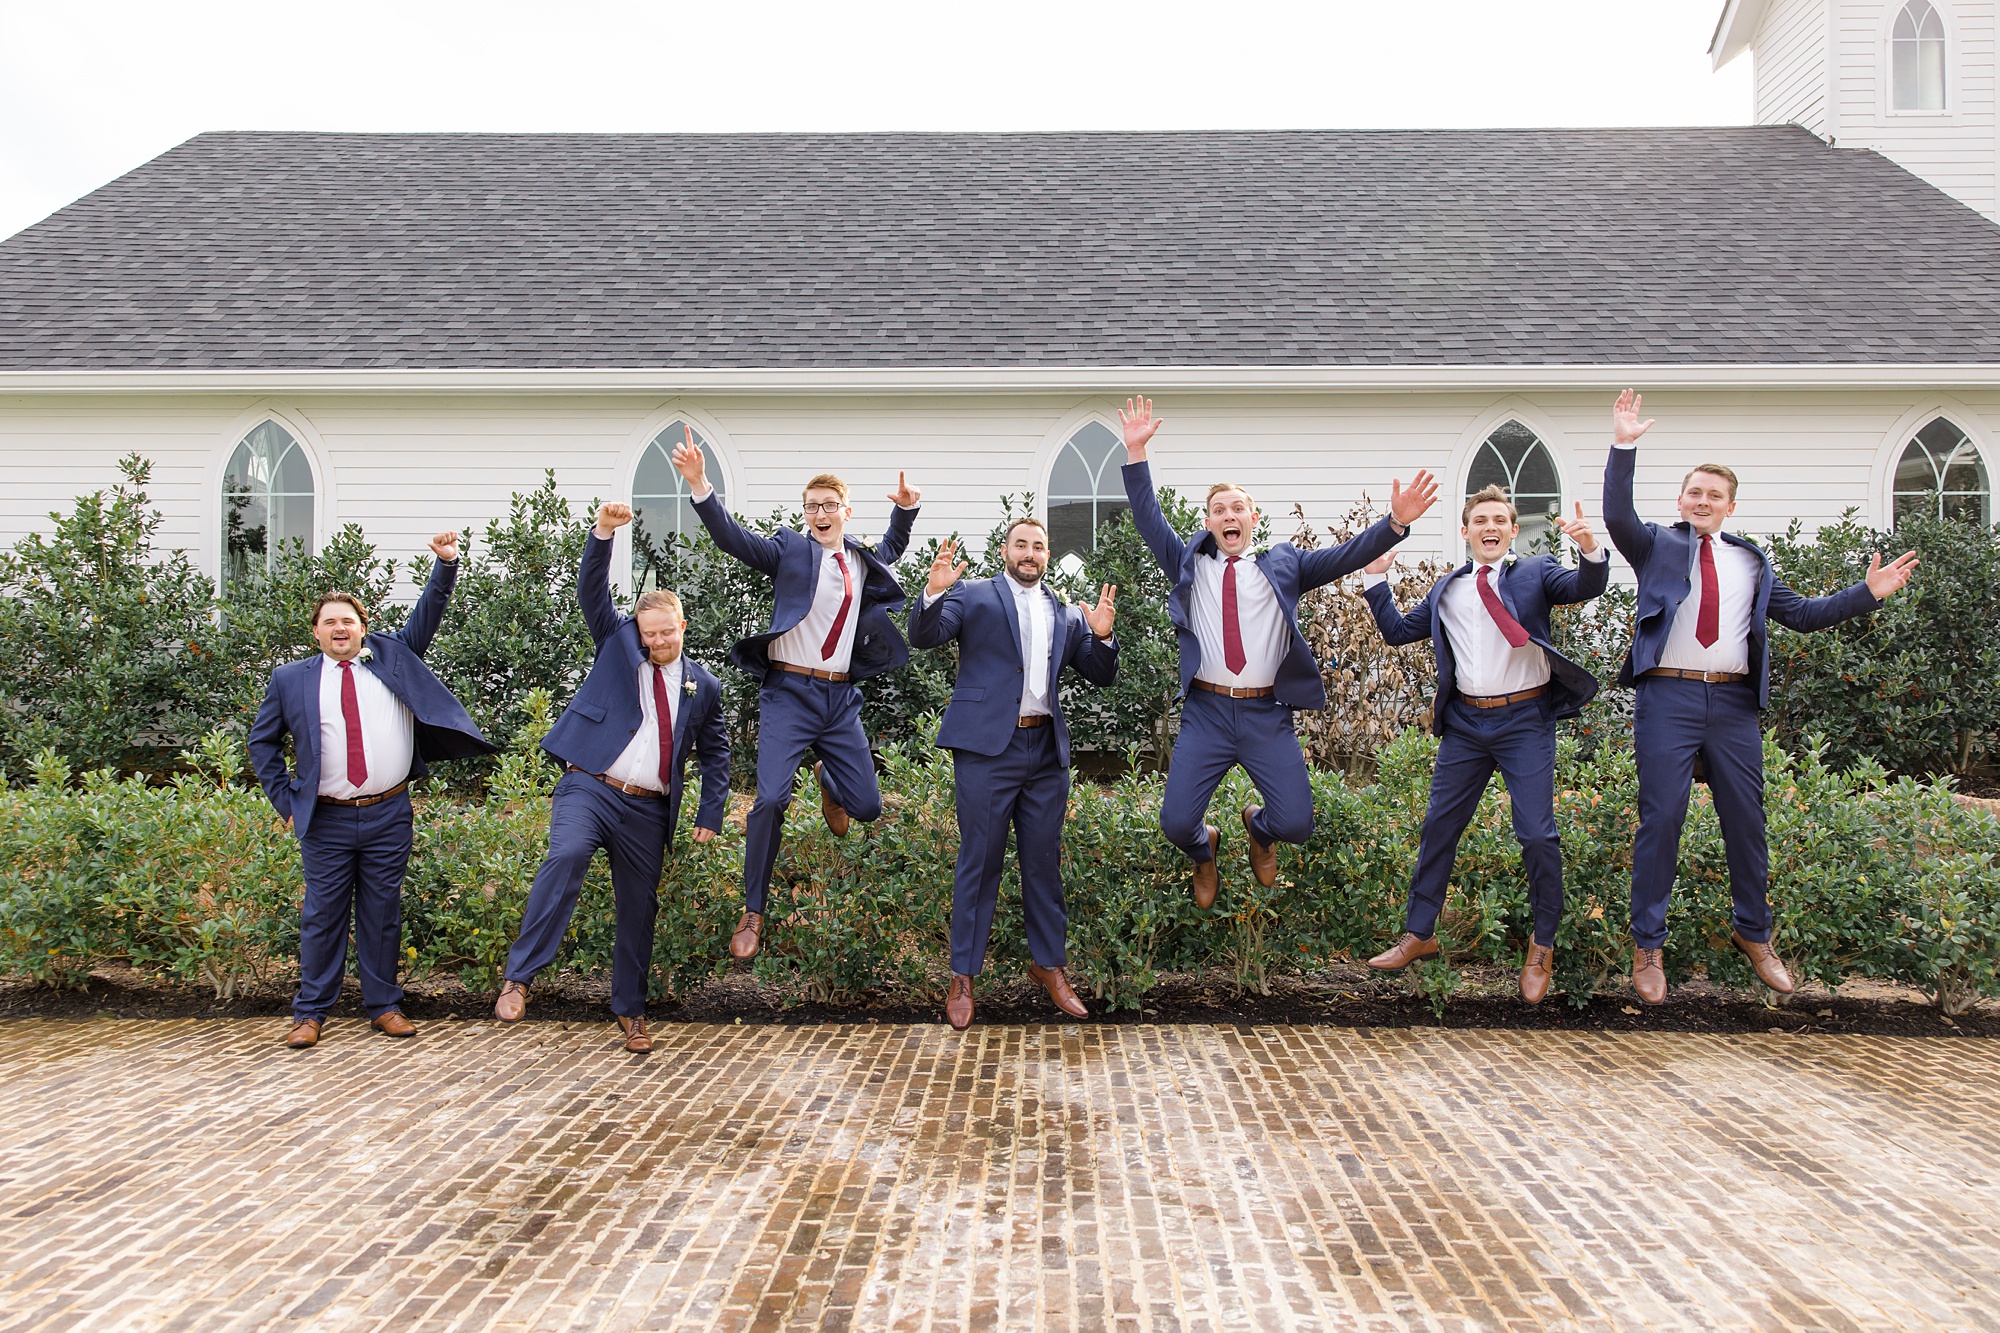 groomsmen jump during photos in Texas